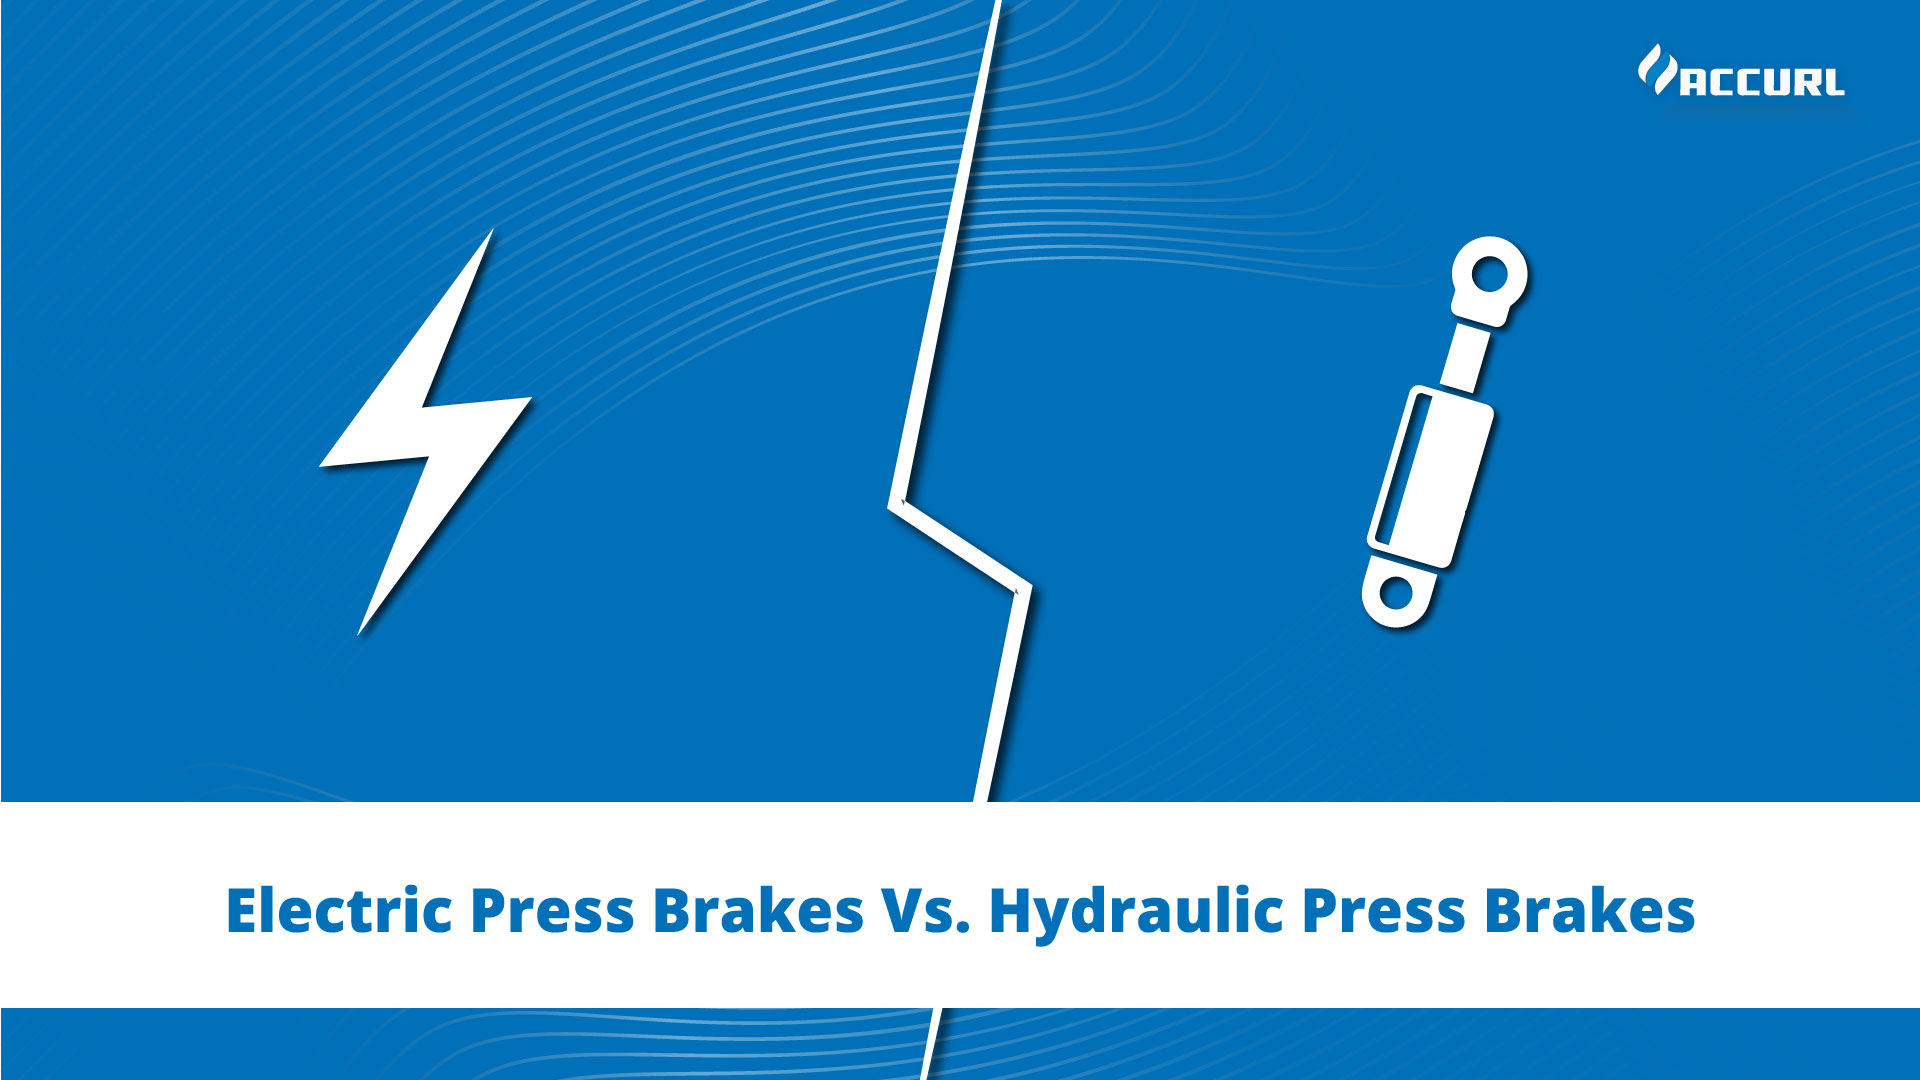 Electric Press Brakes Vs. Hydraulic Press Brakes: How to Choose?